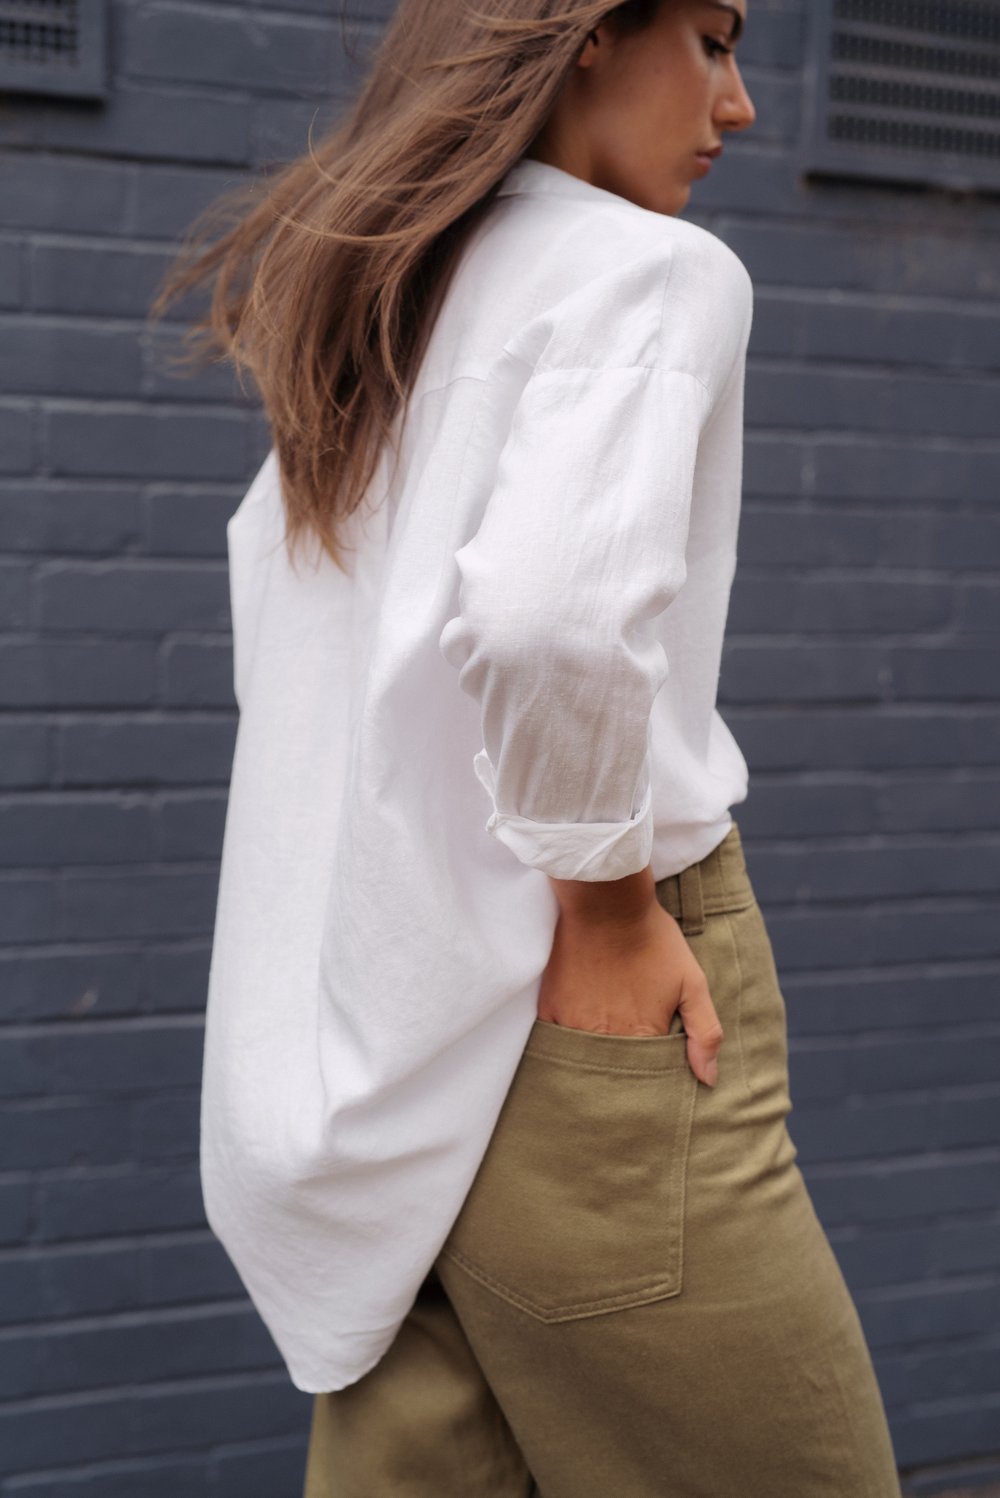 Hemp Clothing Long Sleeve White Shirt